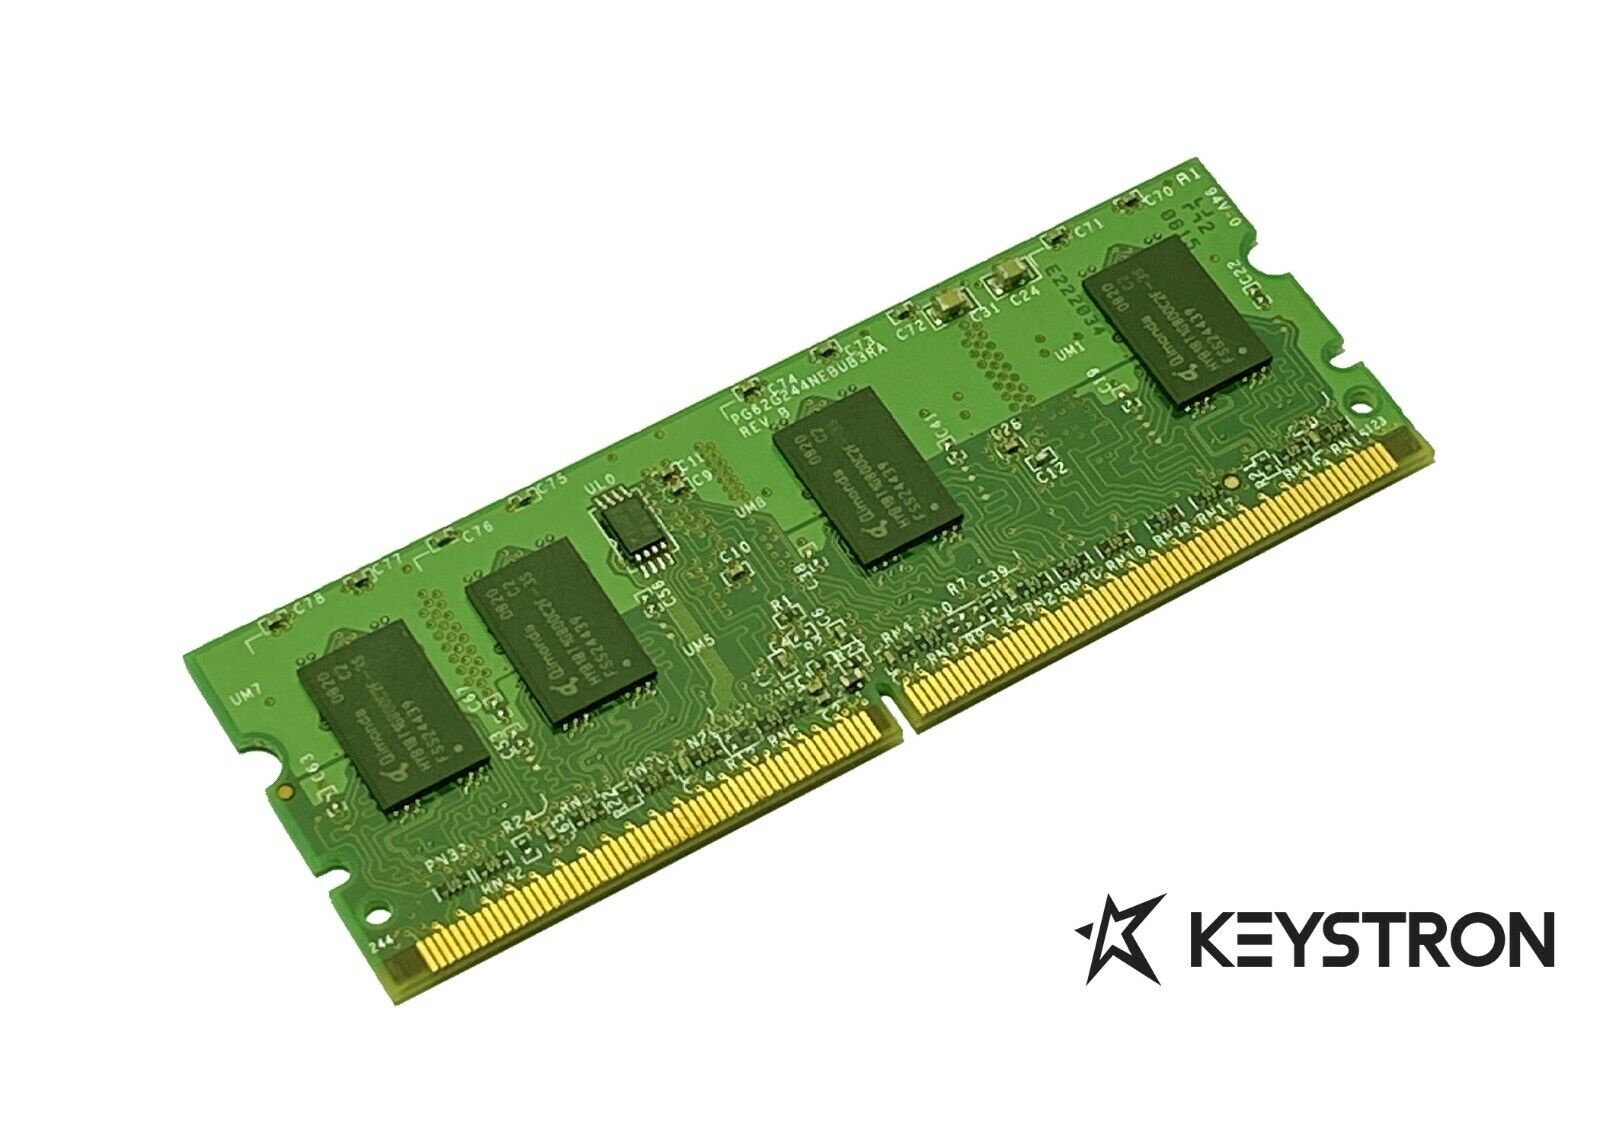 MEM-SUP2T-2GB Upgrade 2GB to 4GB Cisco Compatible Dram Memory for SUP ENGINE 2T2